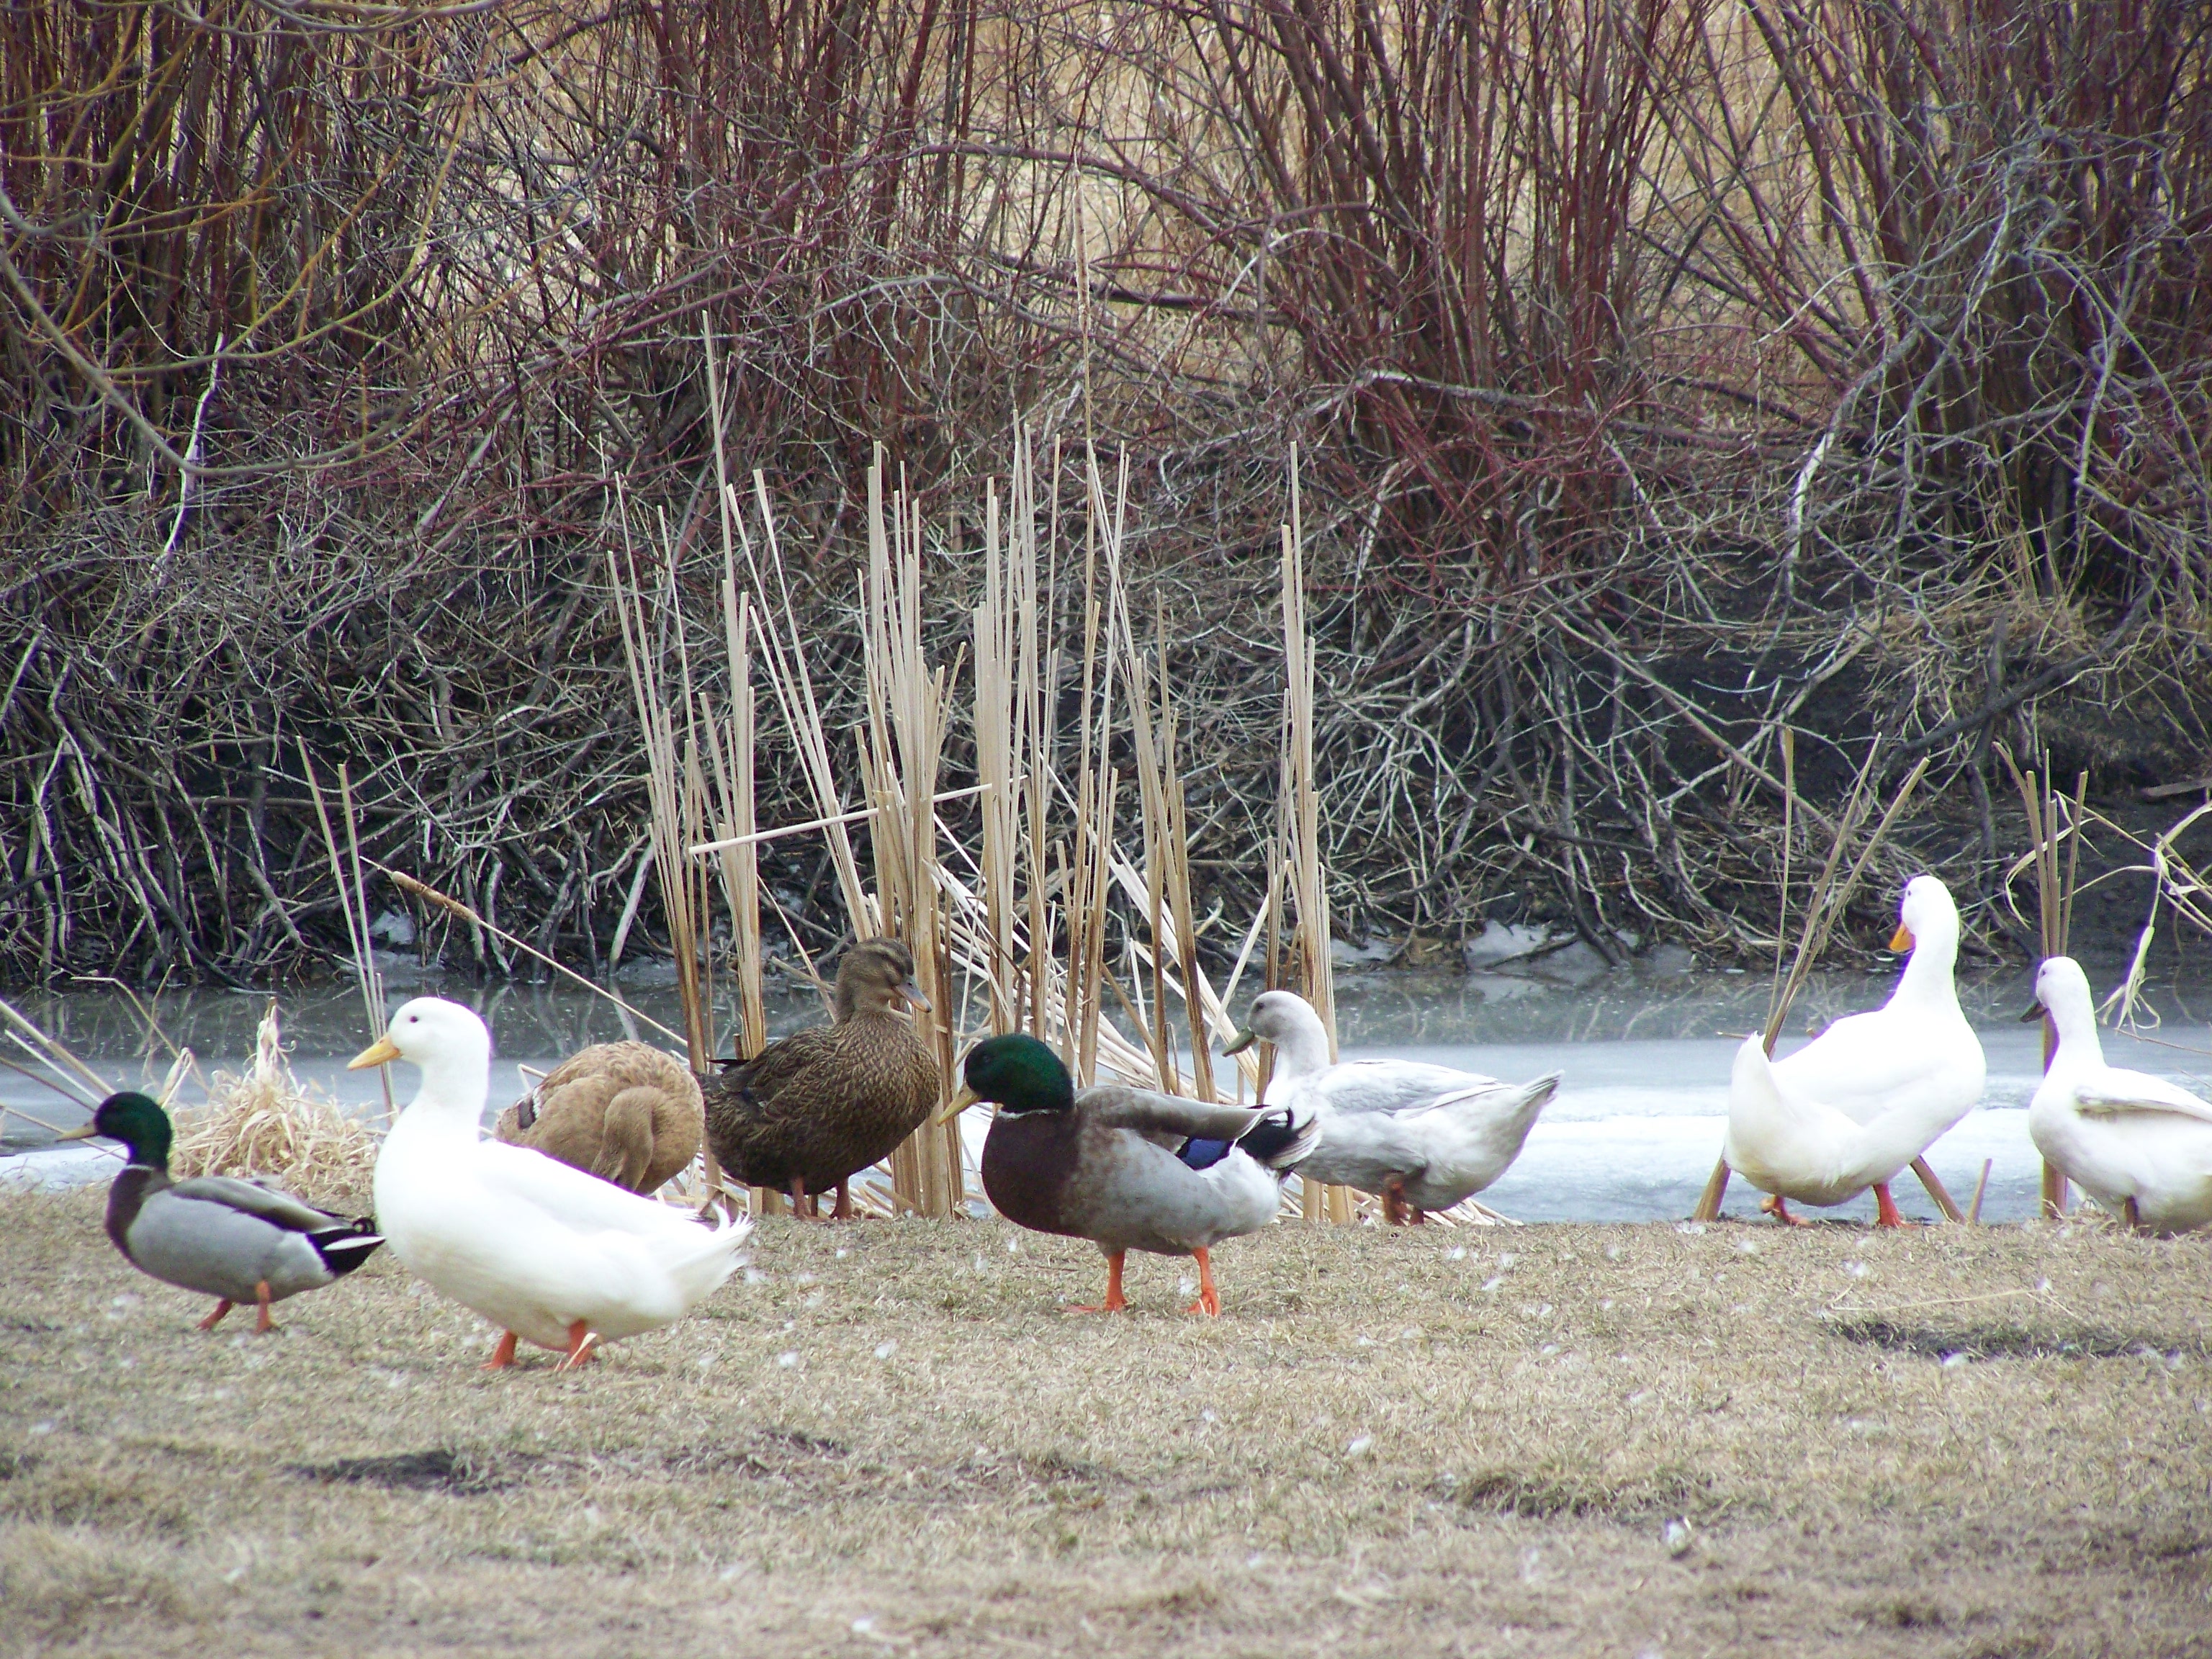 Spring thaw...ducks got first dip into pond.